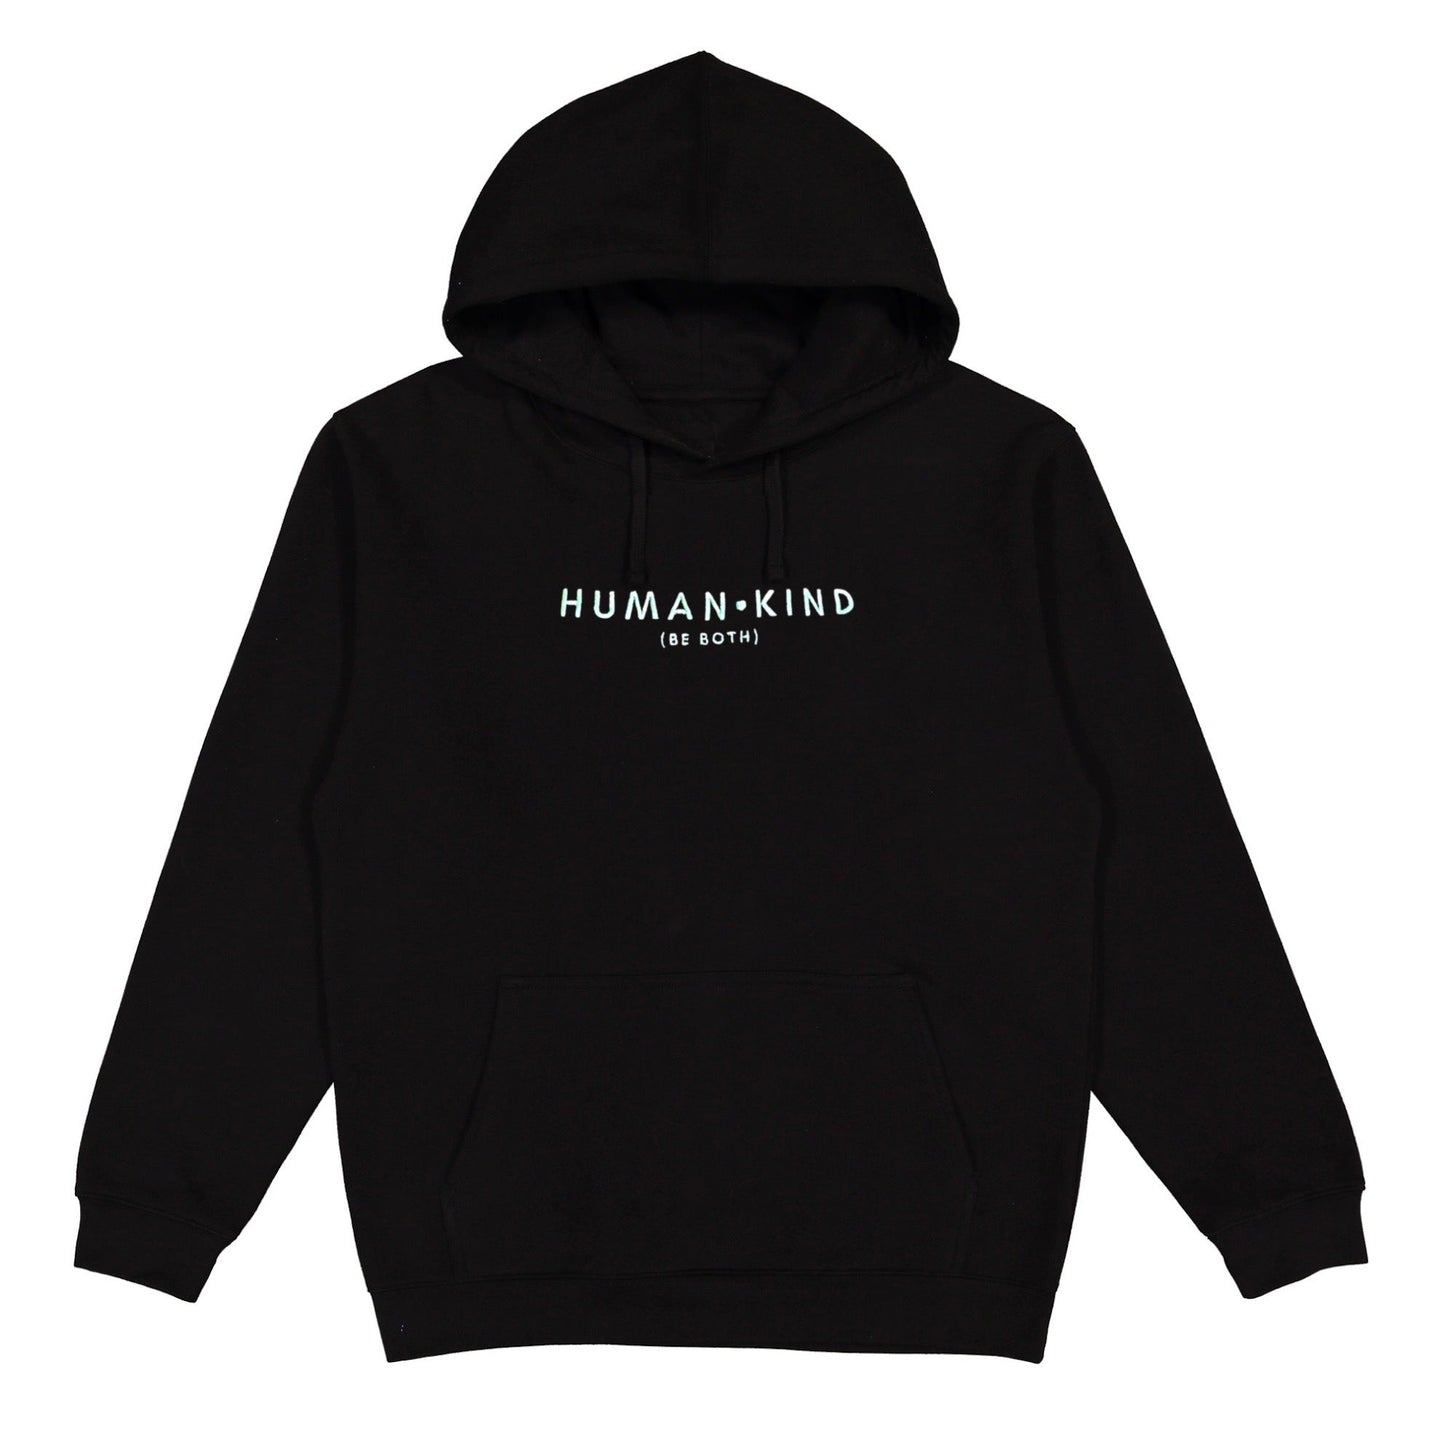 Human Kind Embroidered Hoodie Wear The Peace Hoodies Black S